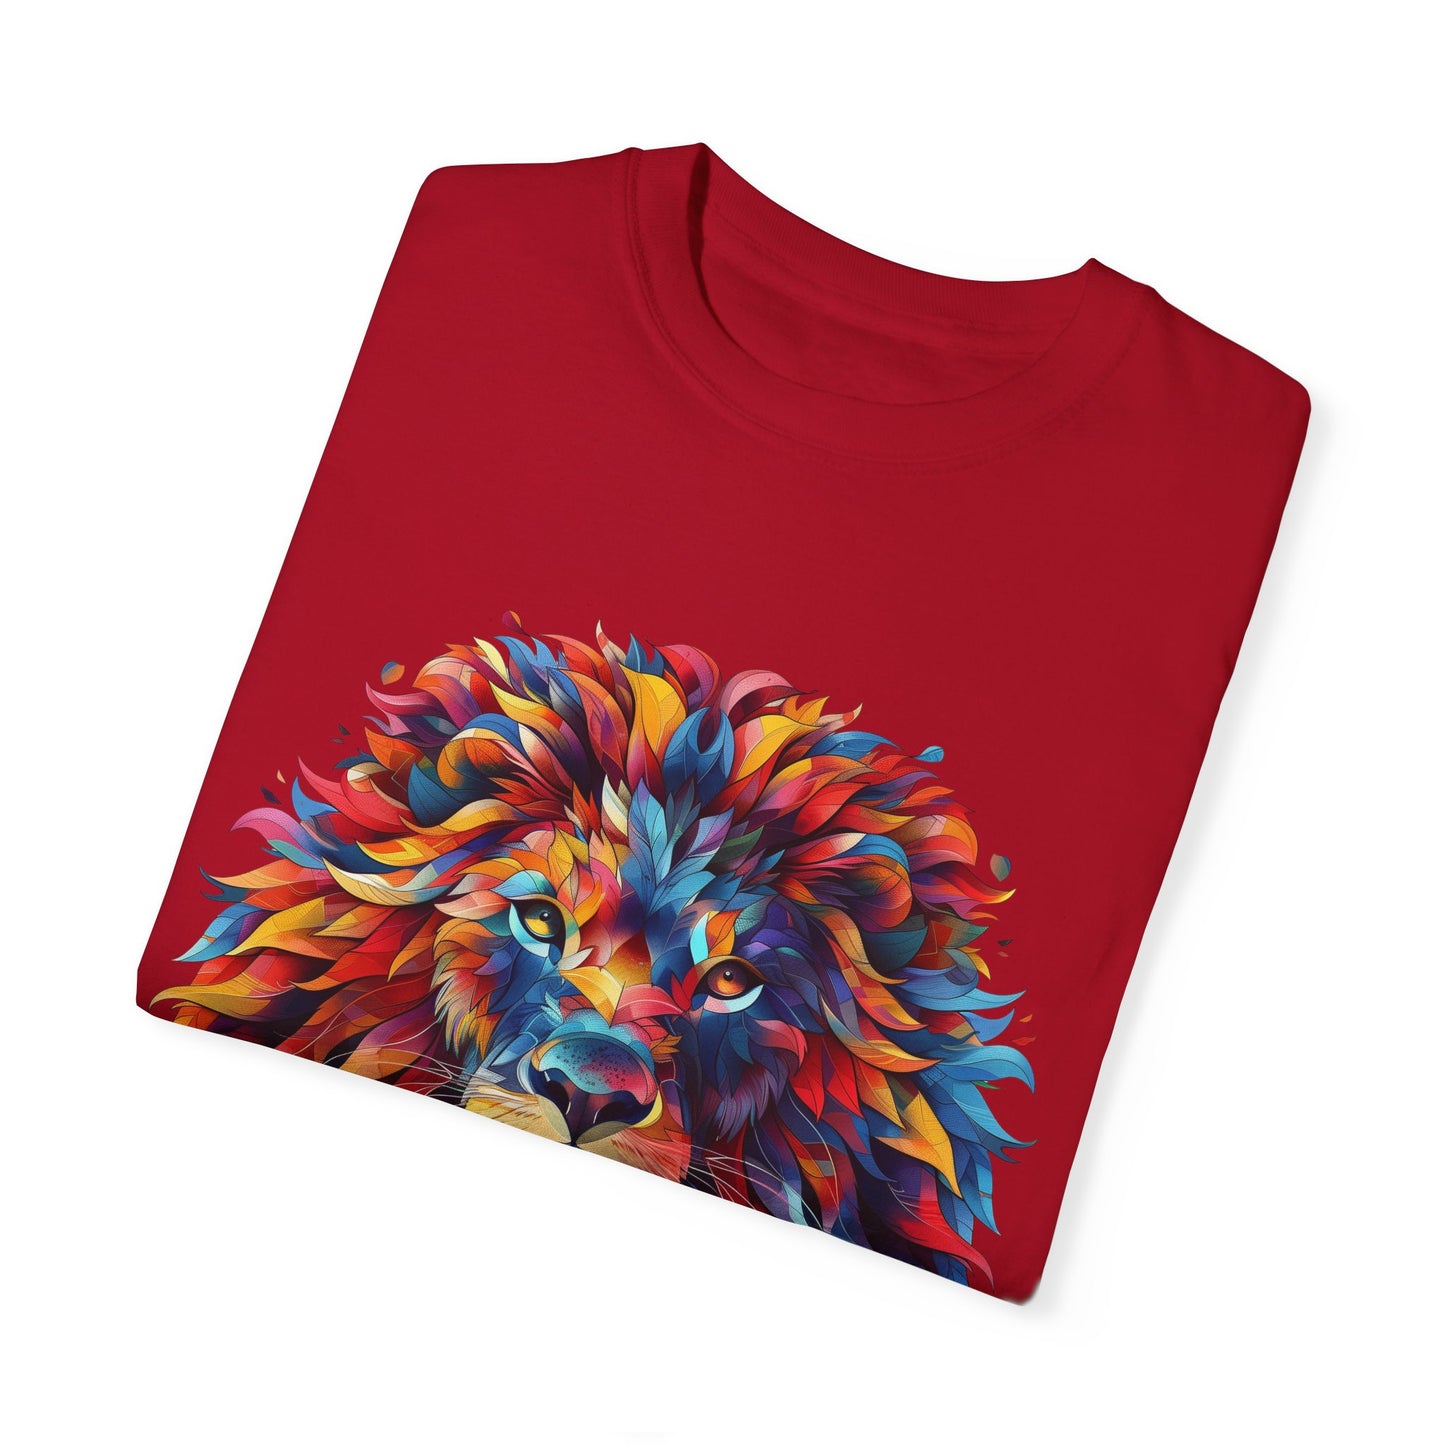 Lion Head Cool Graphic Design Novelty Unisex Garment-dyed T-shirt Cotton Funny Humorous Graphic Soft Premium Unisex Men Women Red T-shirt Birthday Gift-20